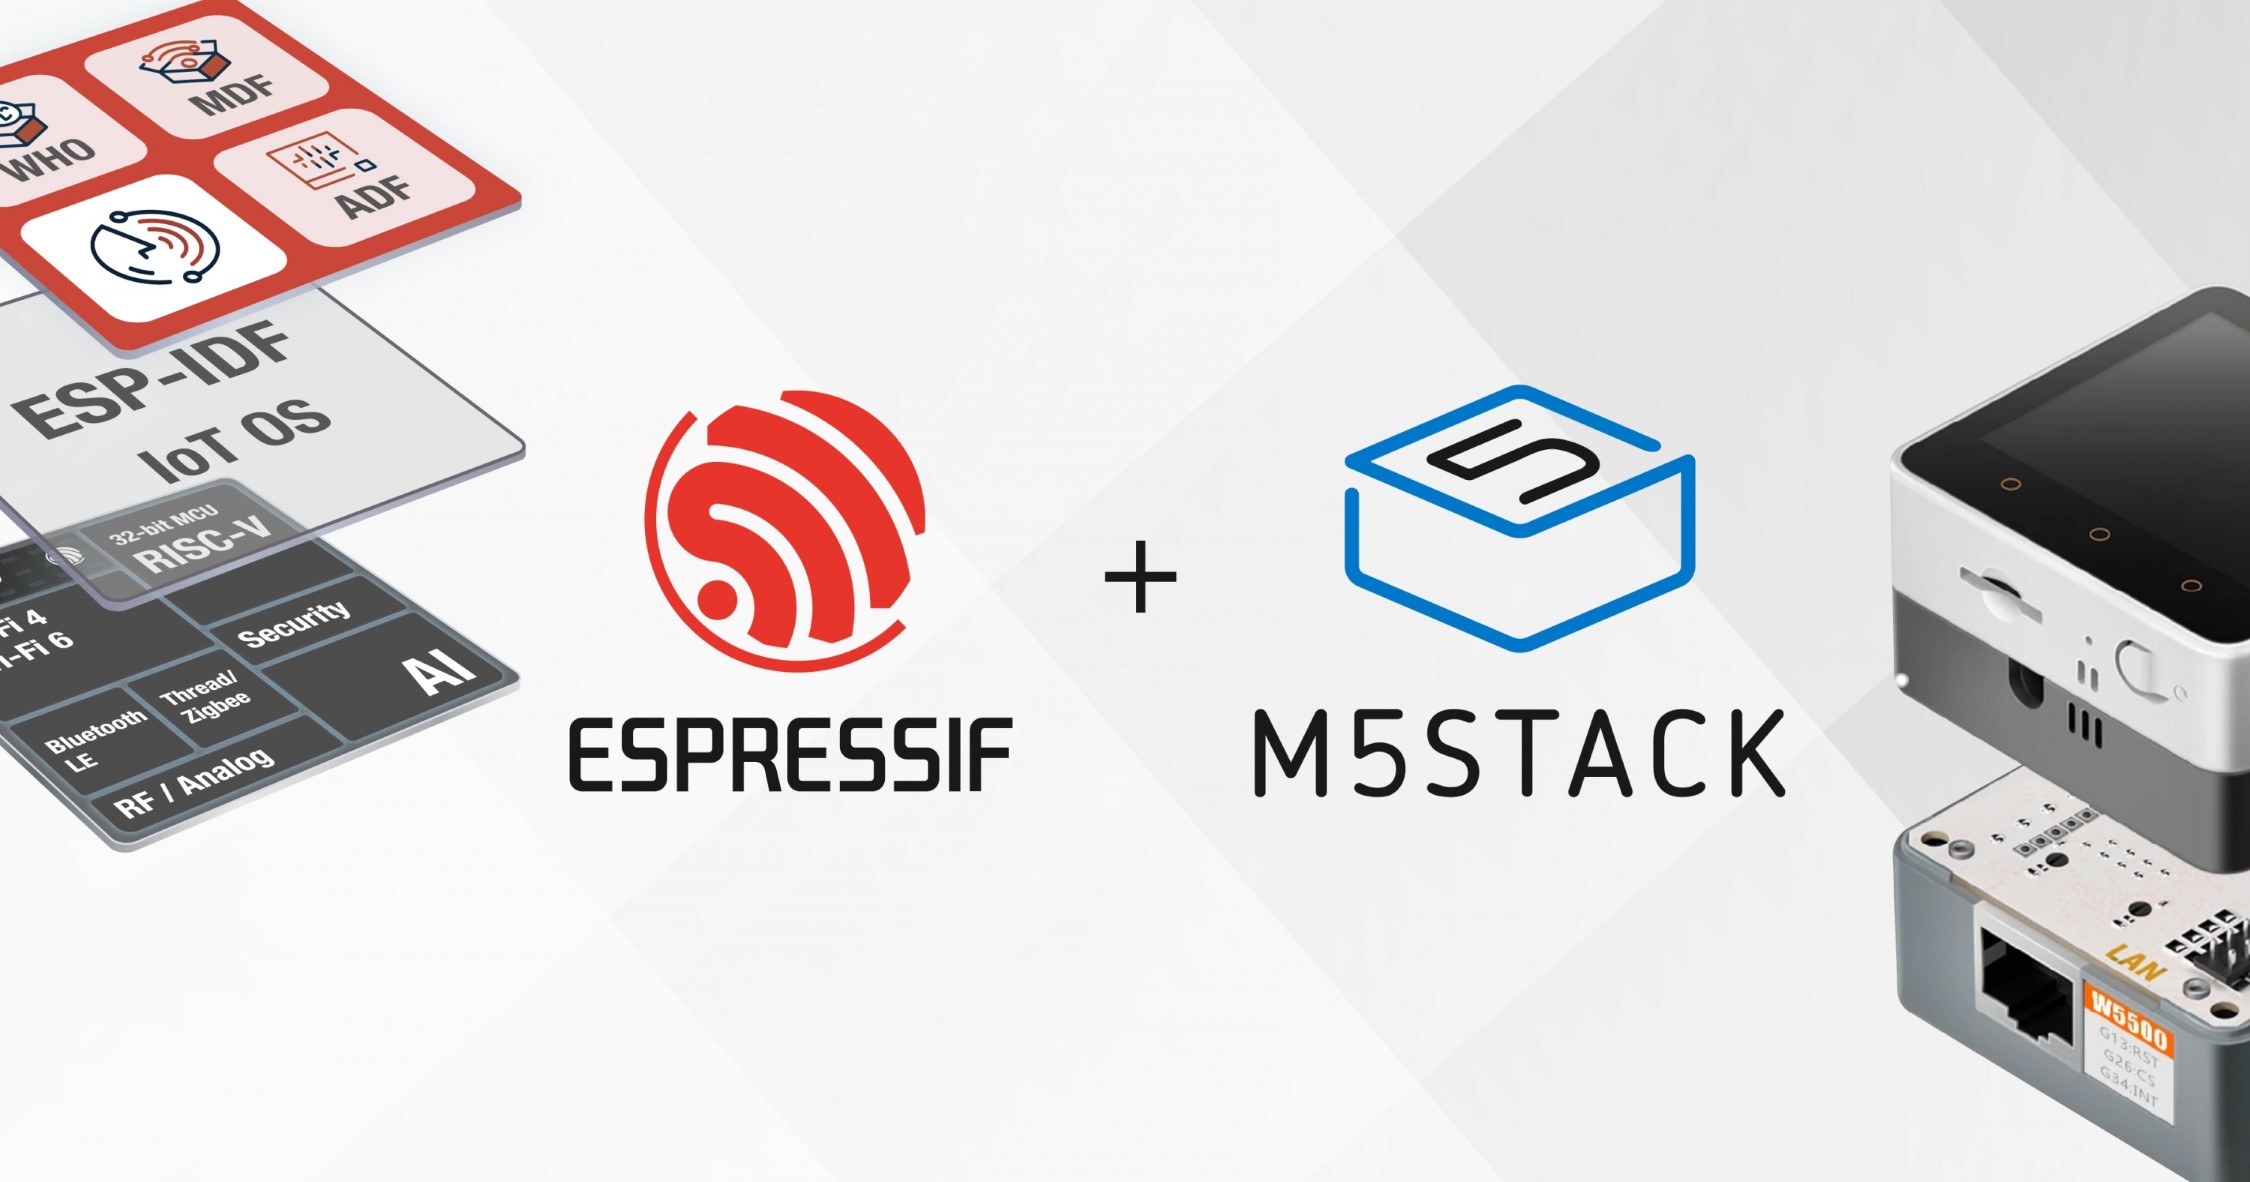 Espressif and M5Stack